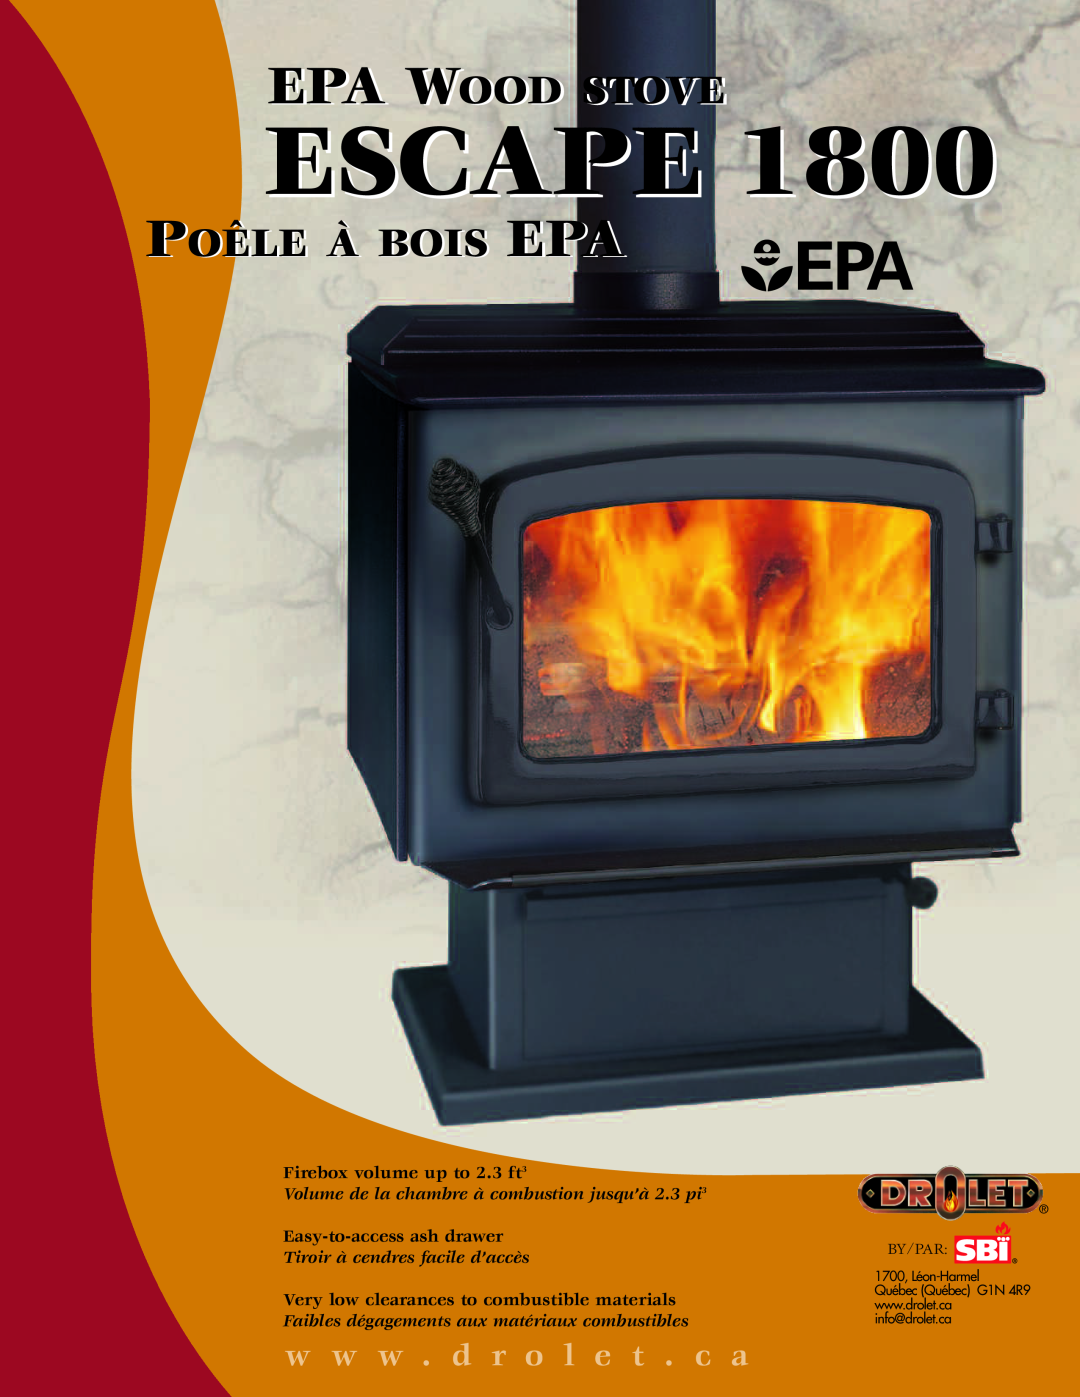 Drolet DB03100 manual Escape, Epa Wood Stove, Poêle À Bois Epa, w w w . d r o l e t . c a, Firebox volume up to 2.3 ft3 